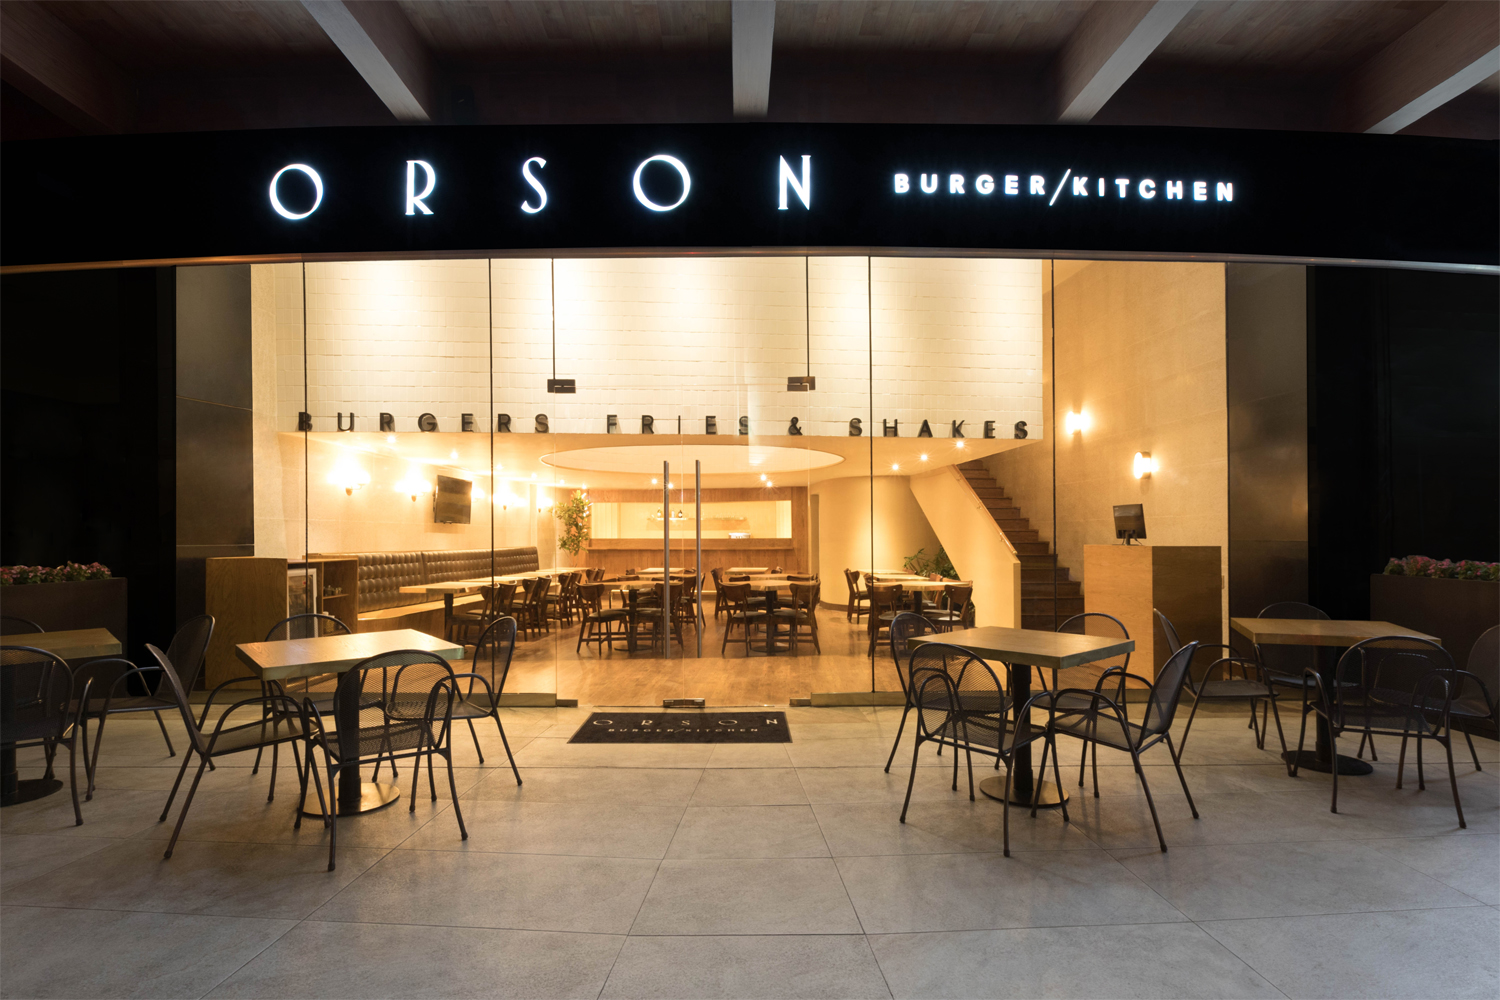 Interior design by Anagrama for San Pedro based burger bar Orson